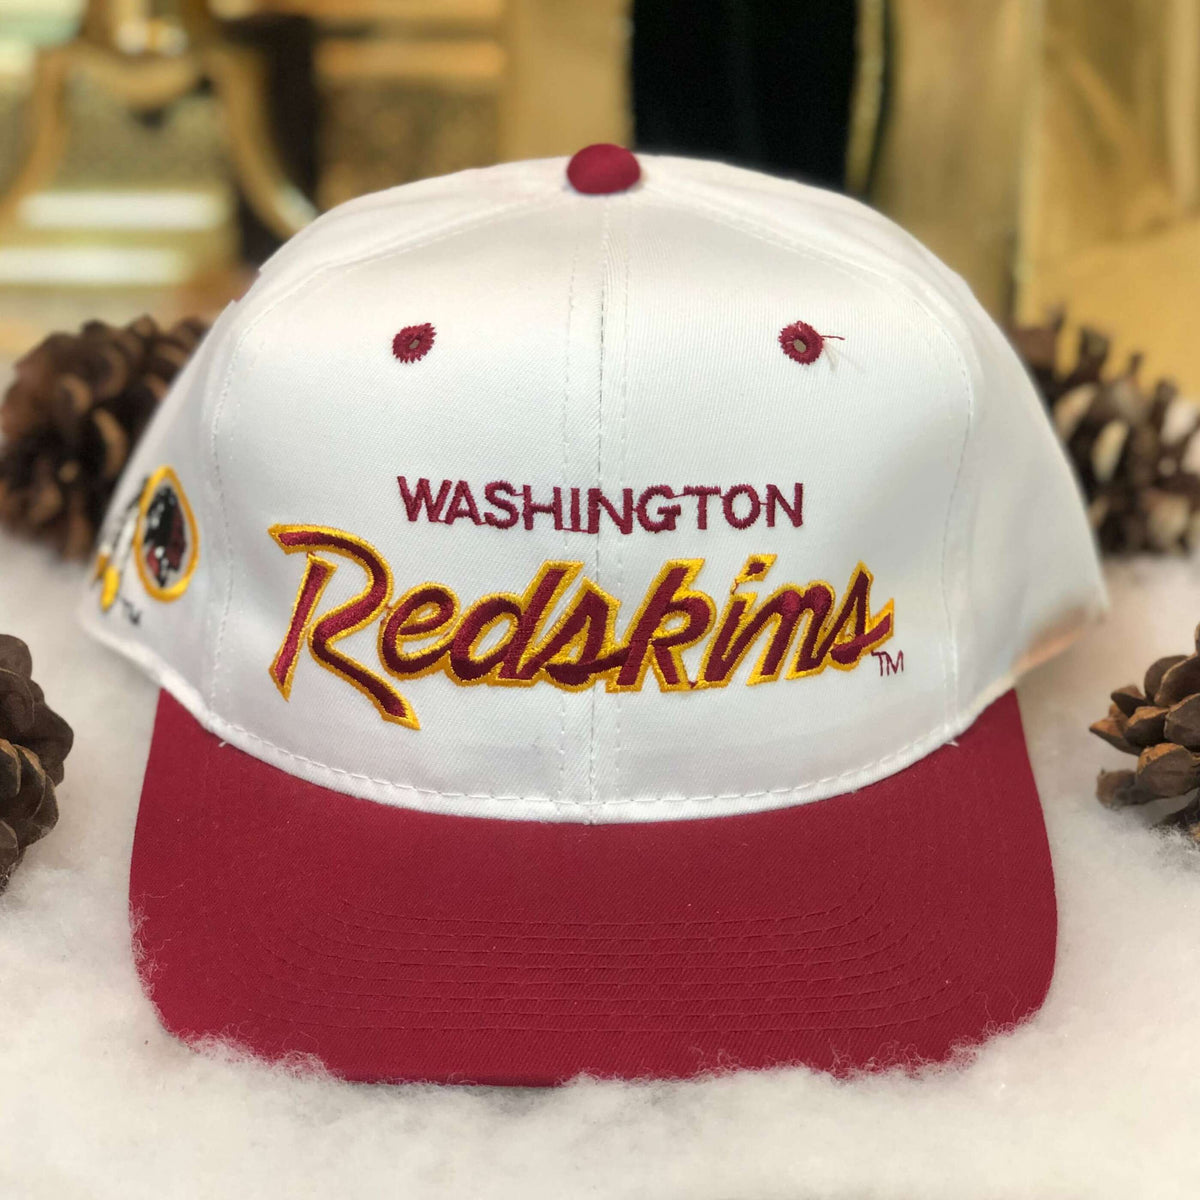 NEW VINTAGE WASHINGTON REDSKINS CORDUROY HAT/CAP WITH TAGS